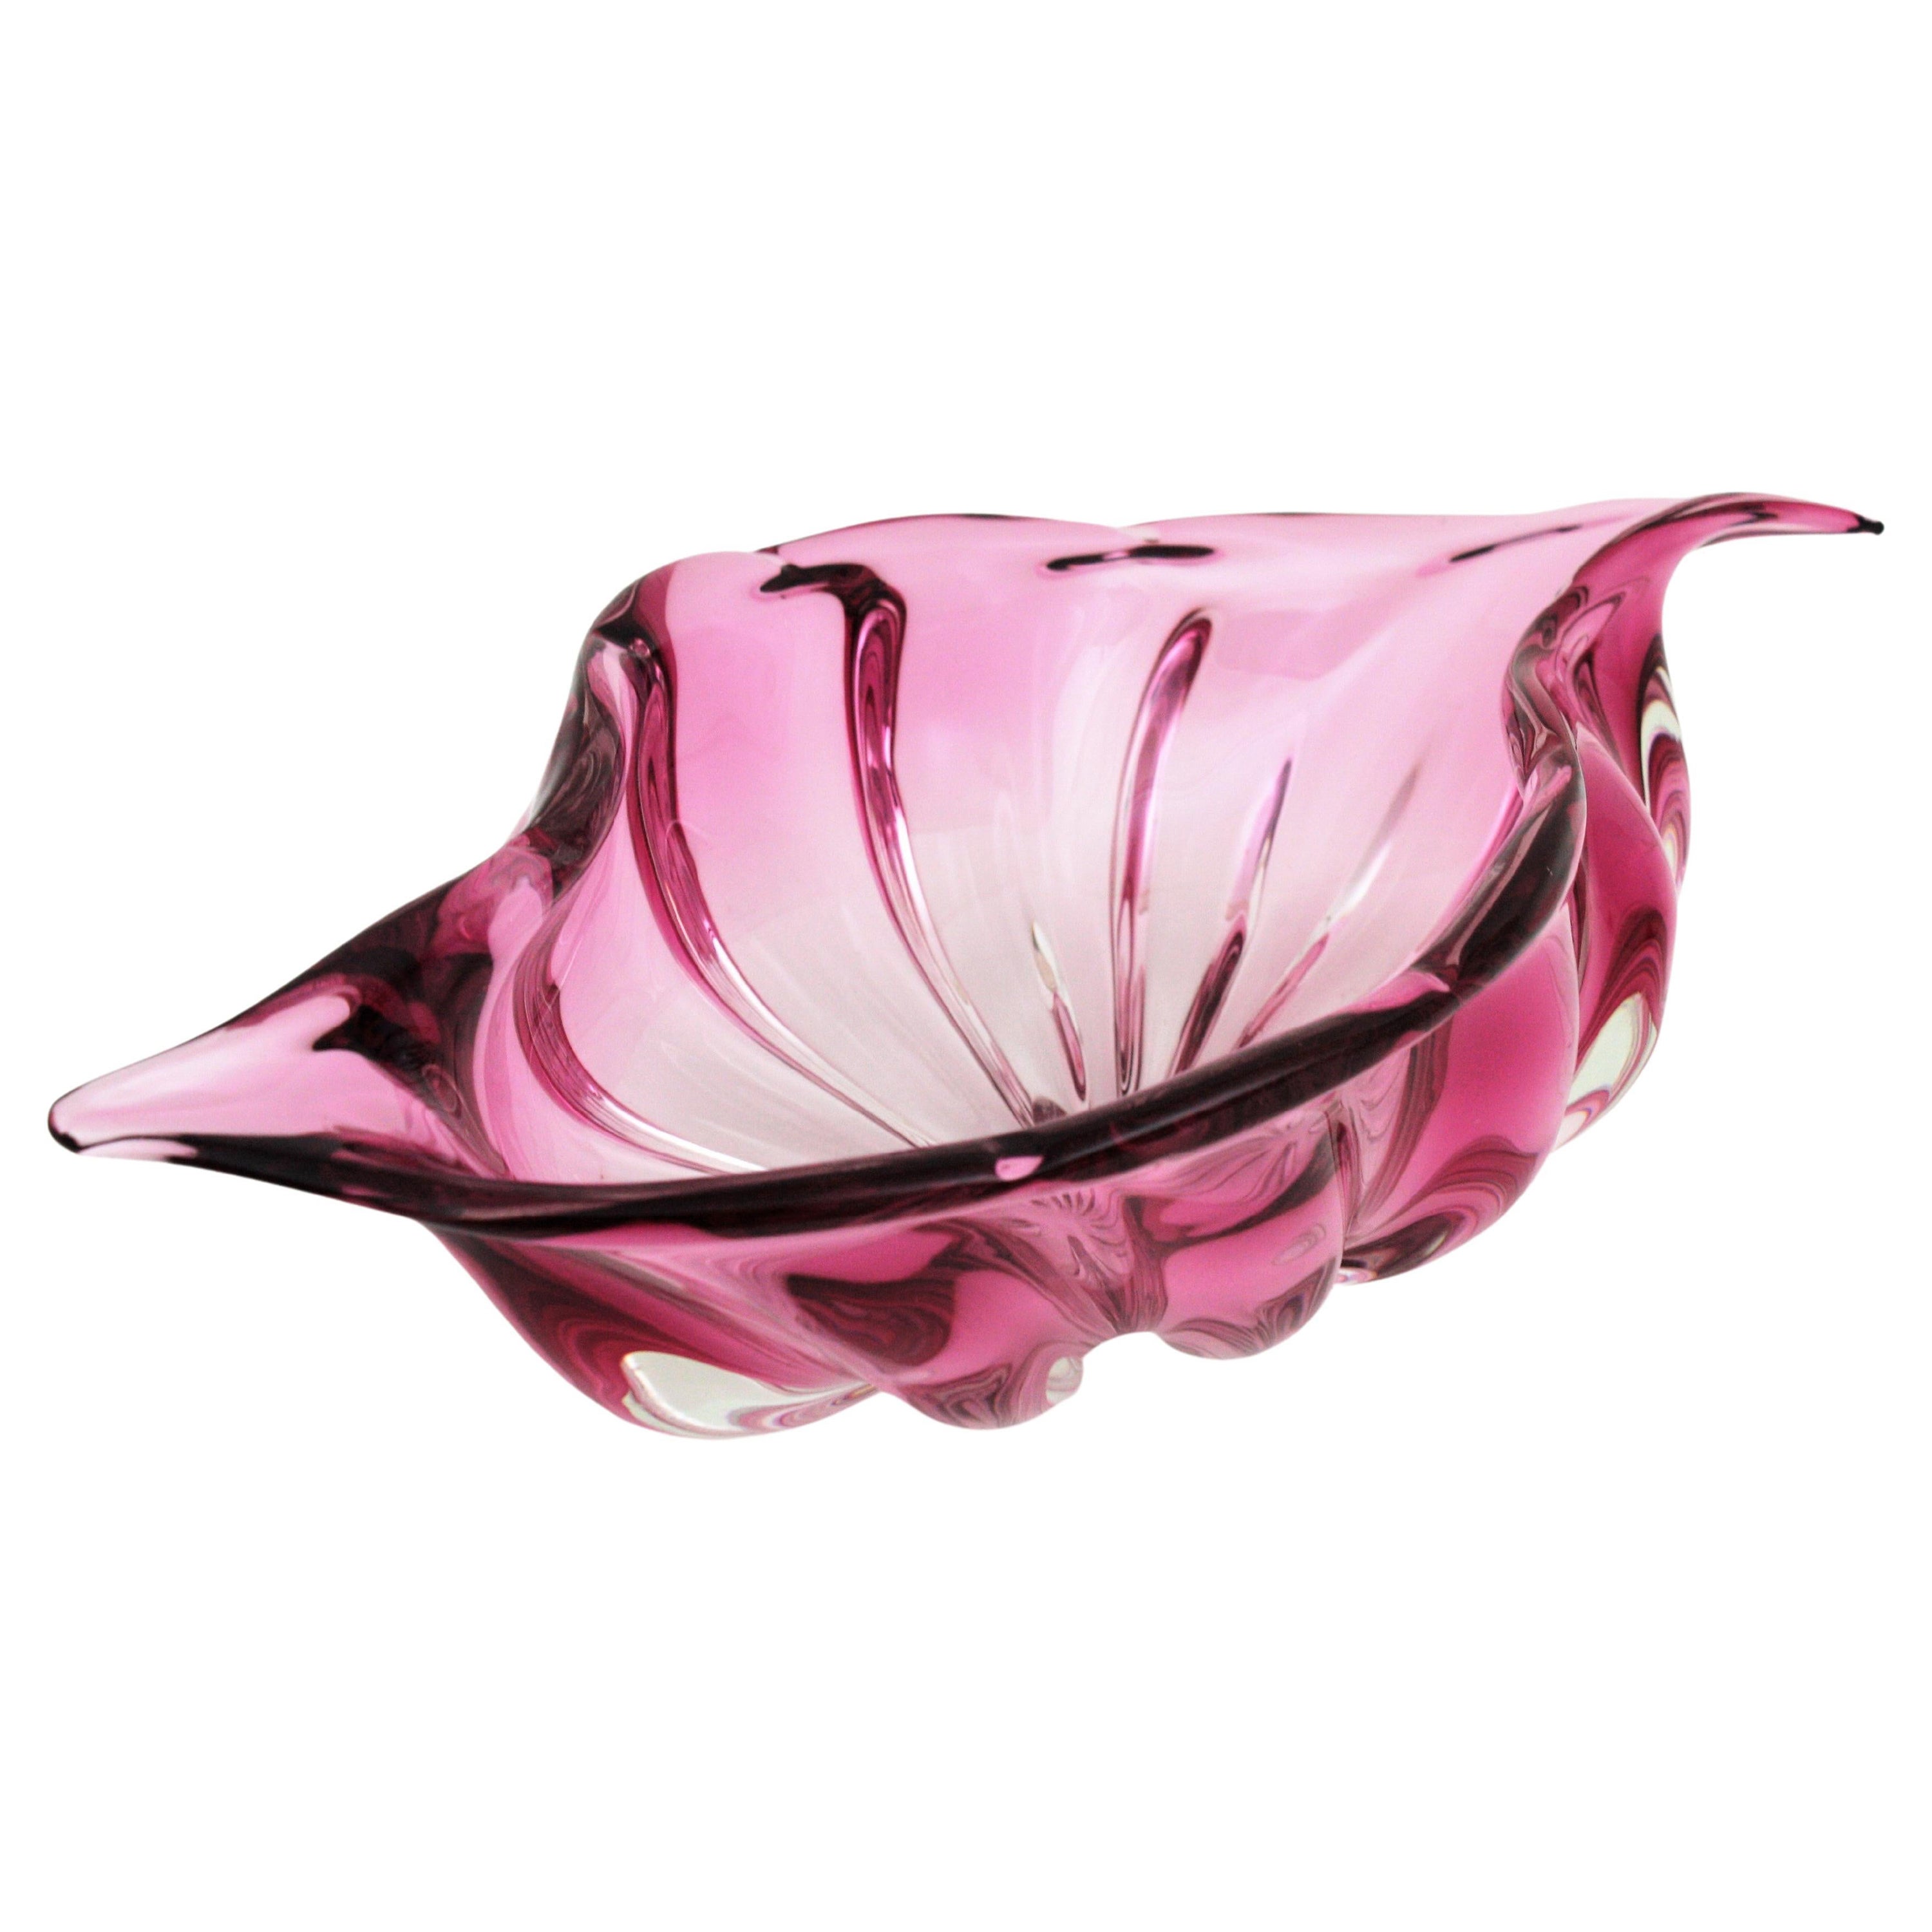 Alfredo Barbini Murano Sommerso Pink Art Glass Centerpiece Decorative Bowl (bol décoratif)